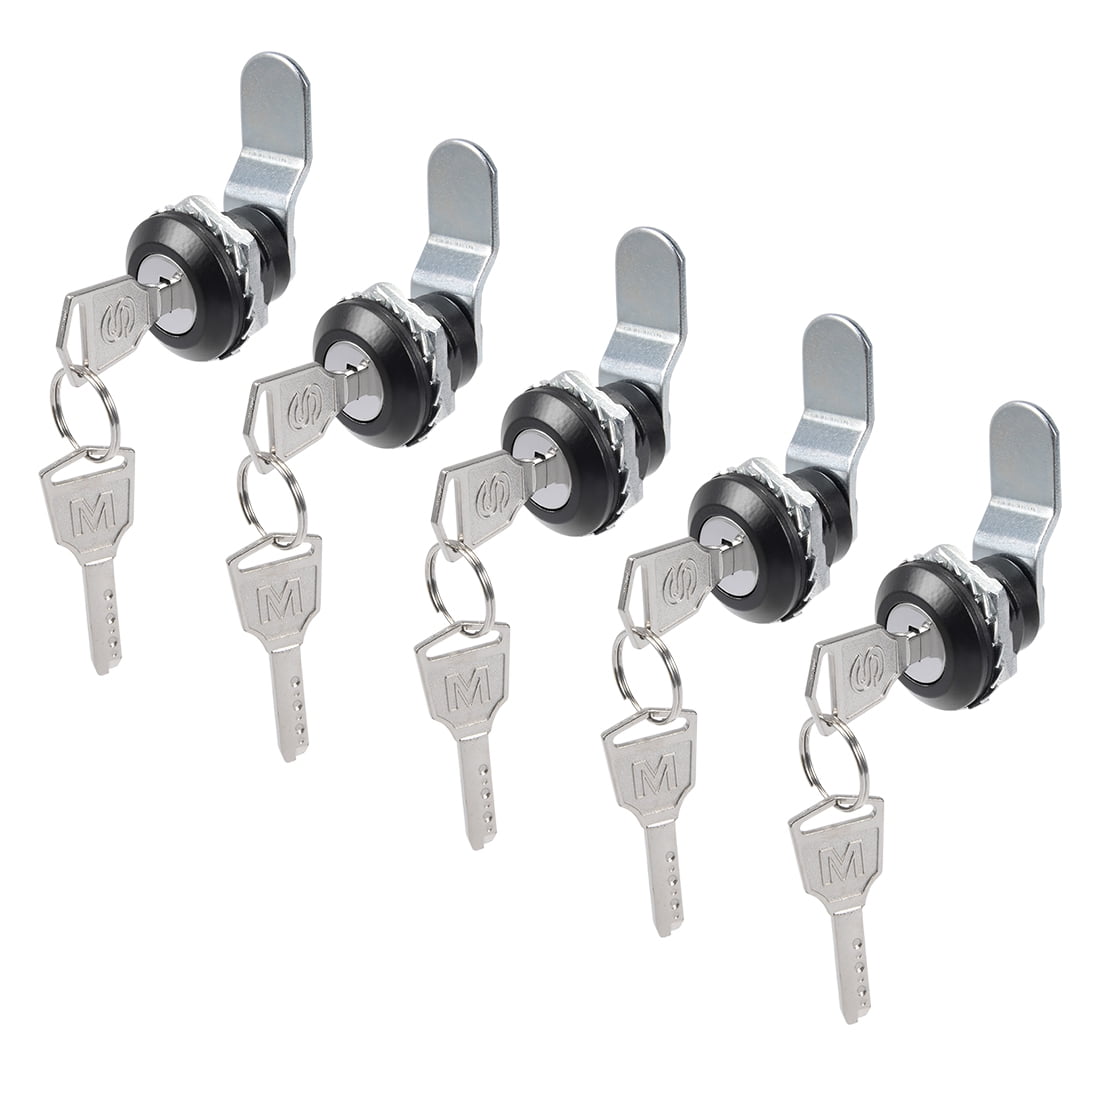 2 Pcs 19mm Cylinder Length Zinc Alloy Chrome Plated Cam Lock w Keys Keyed Alike 